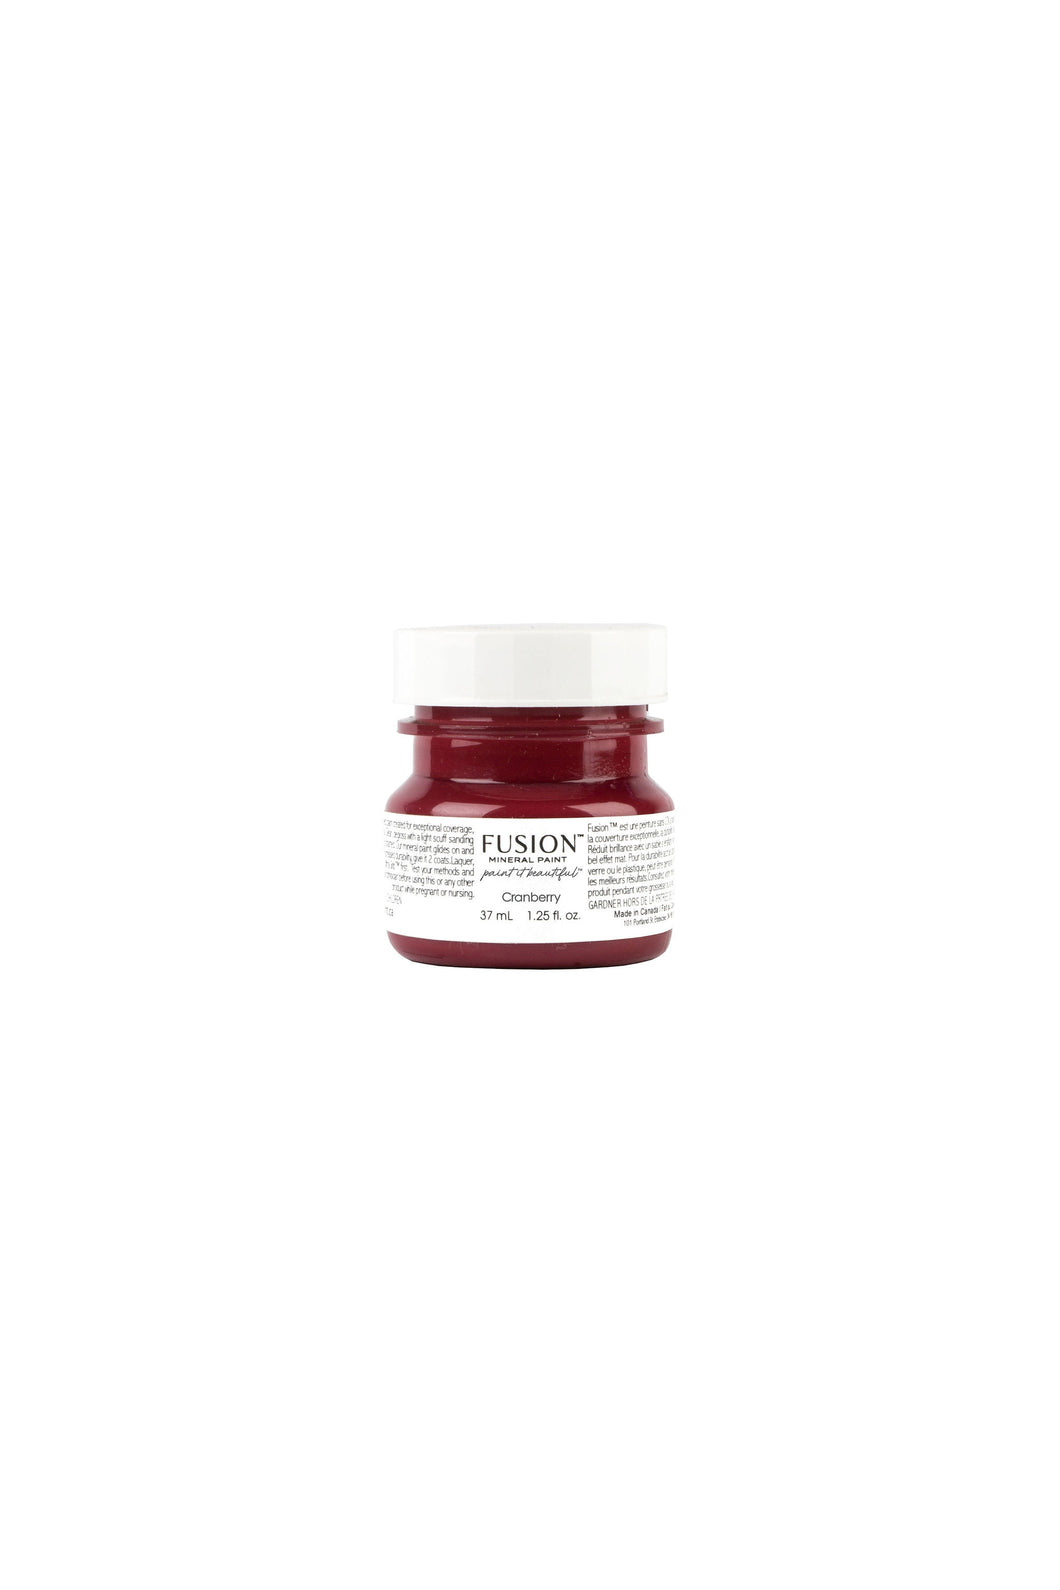 Fusion Mineral Paint - Cranberry 37 ml Jar